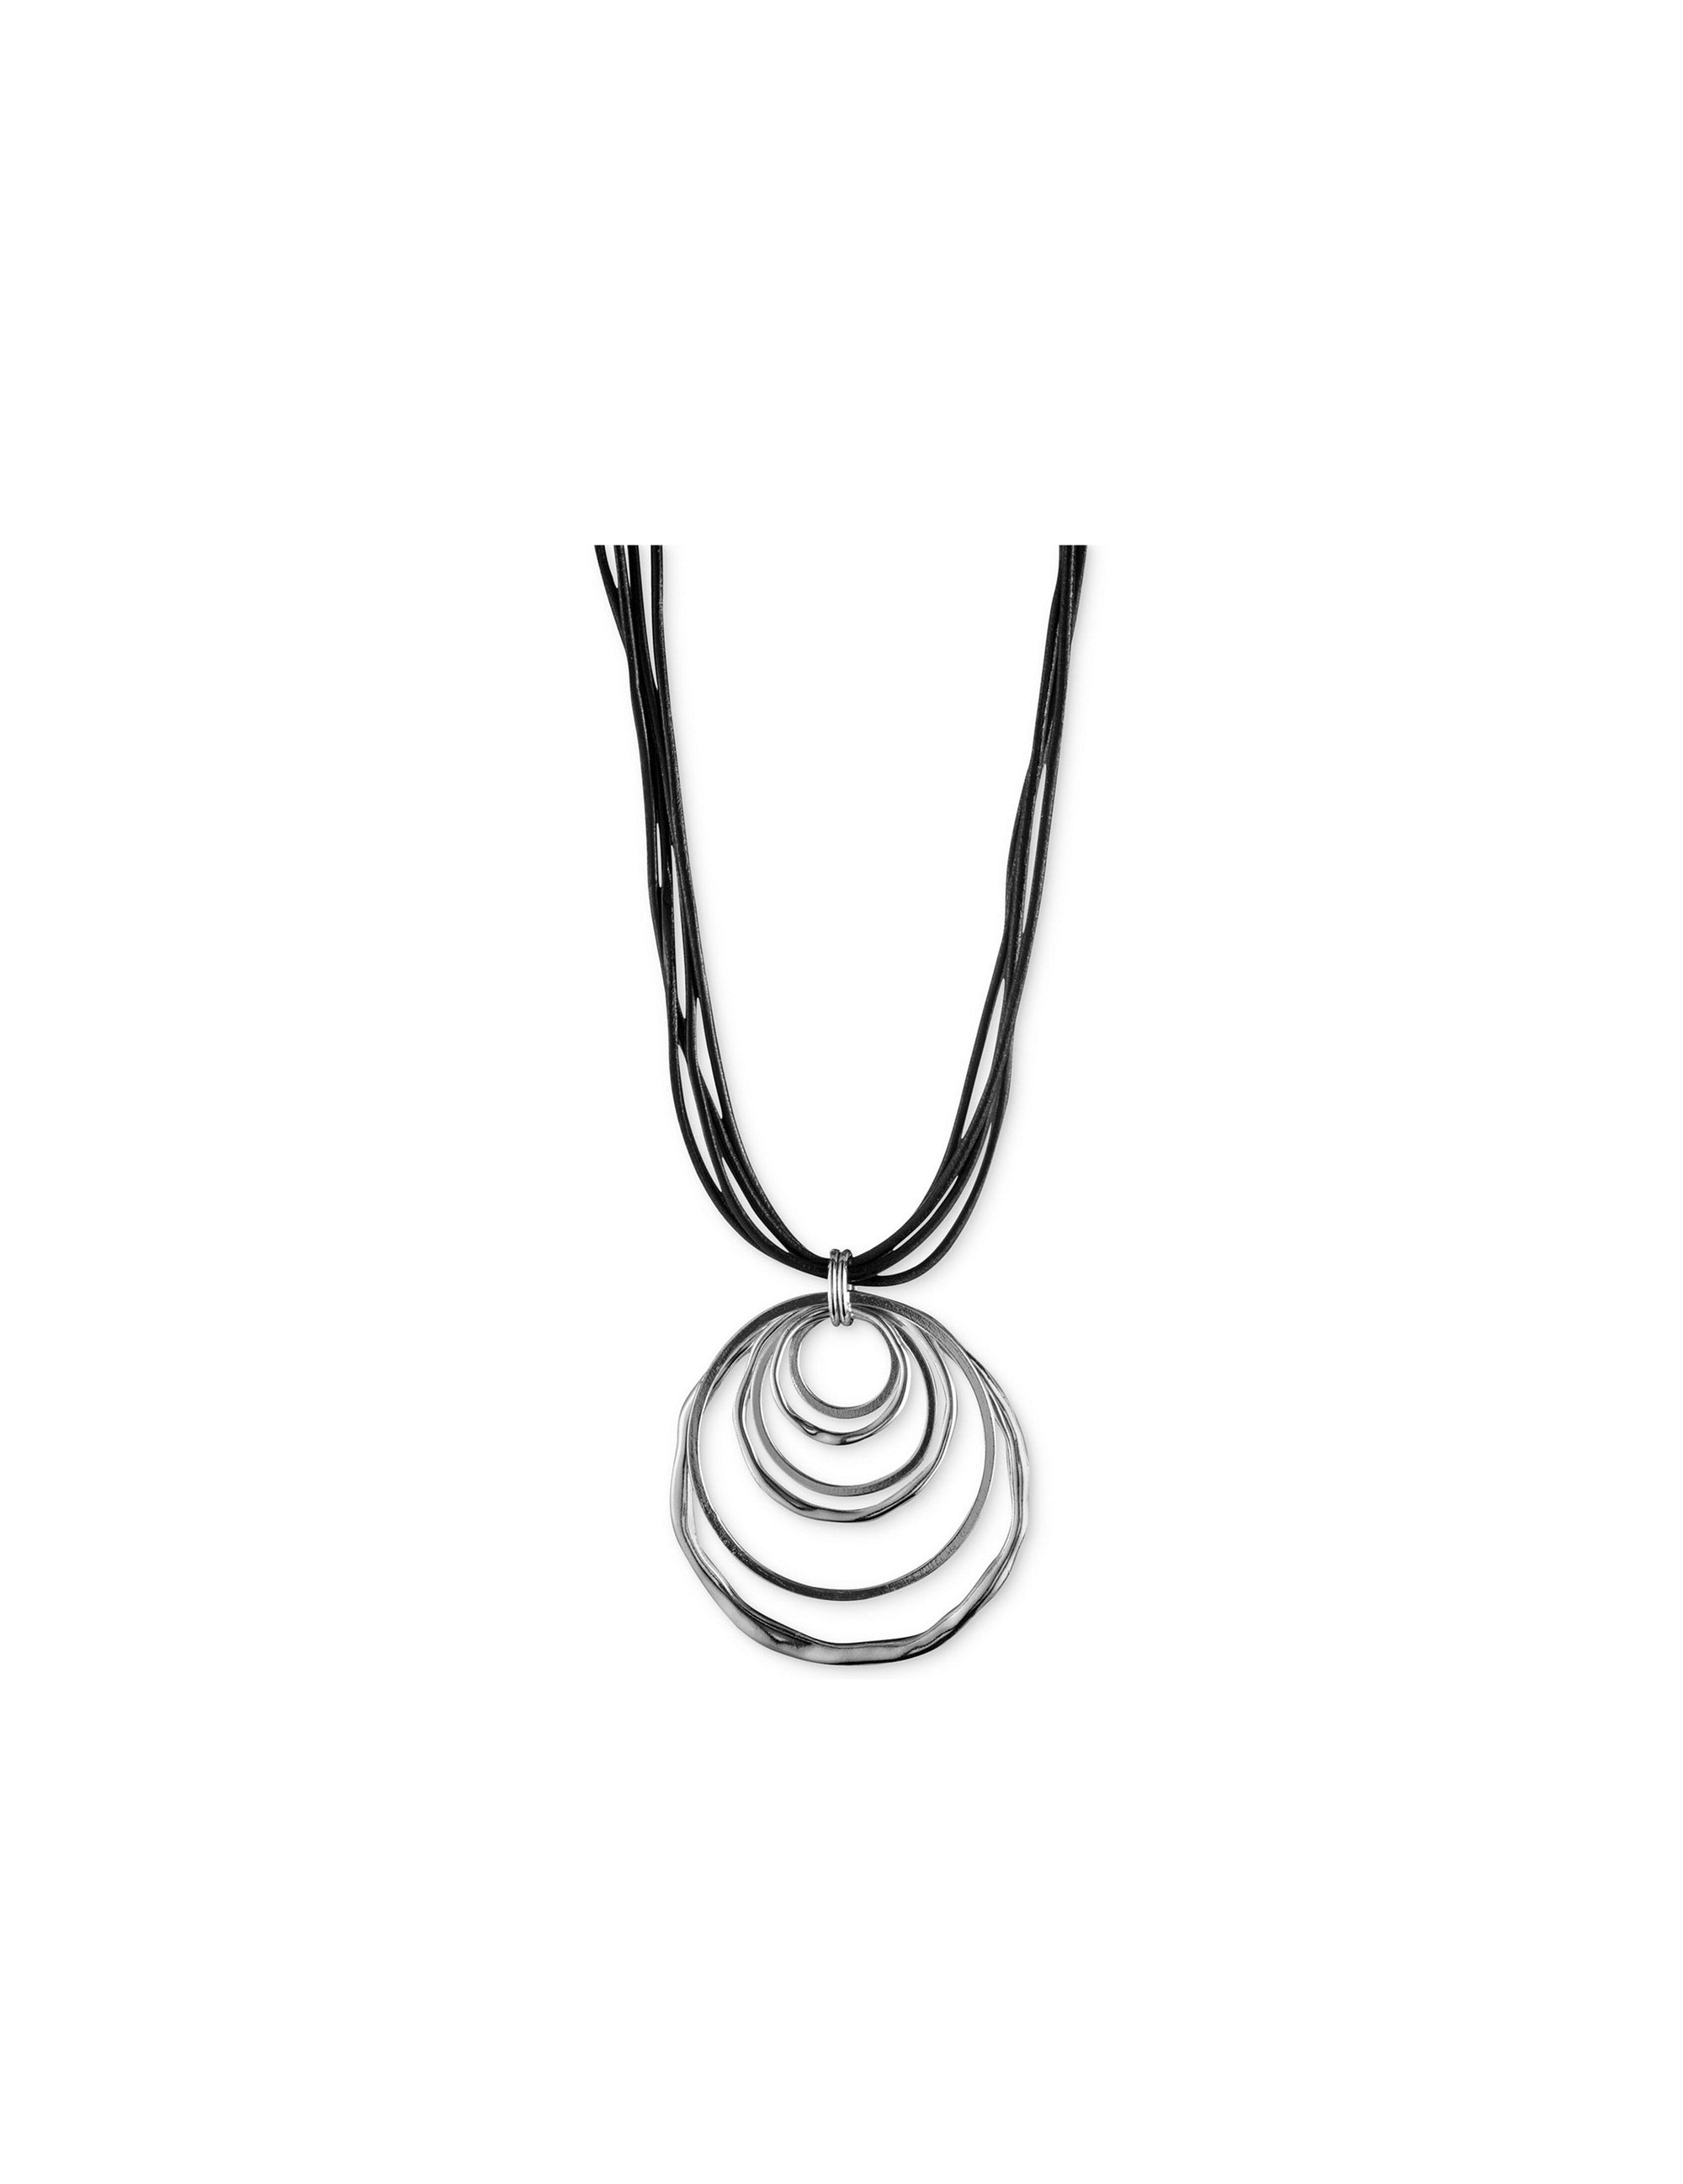 Anne Klein Silver-Tone&Black Multi Inter Hoop Large Pendant Necklace Silver/Black